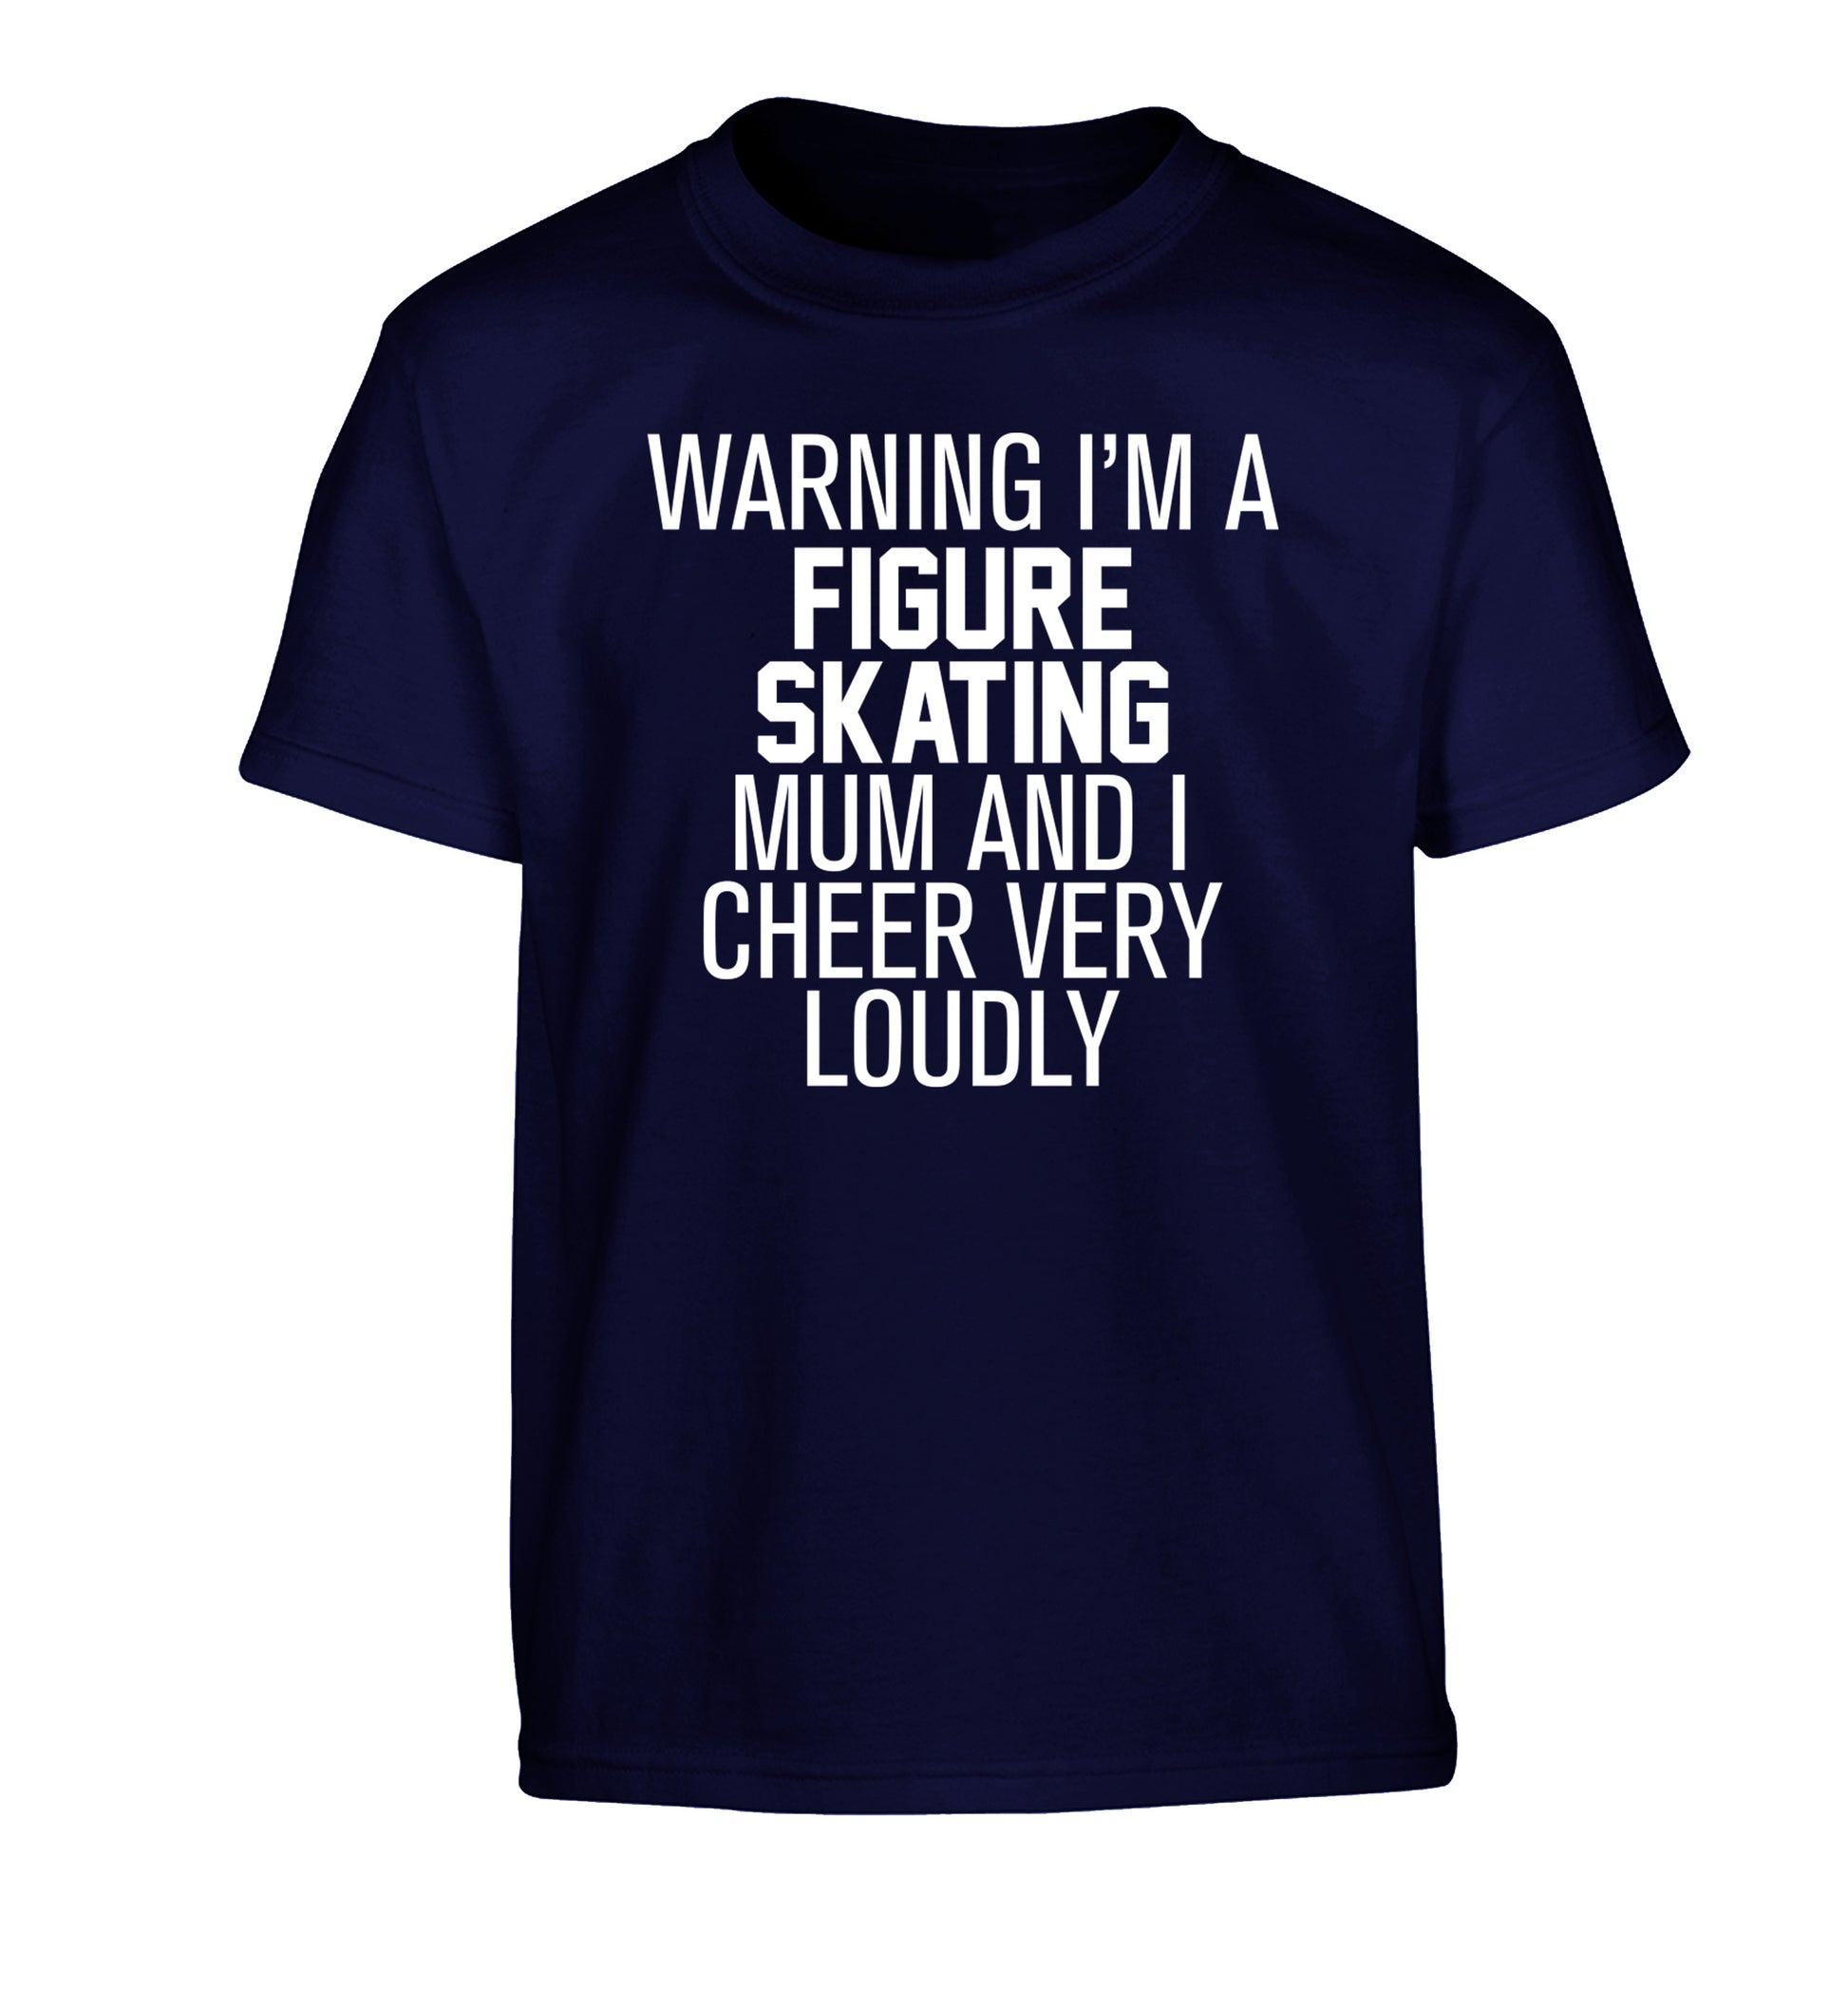 Warning I'm a figure skating mum and I cheer very loudly Children's navy Tshirt 12-14 Years